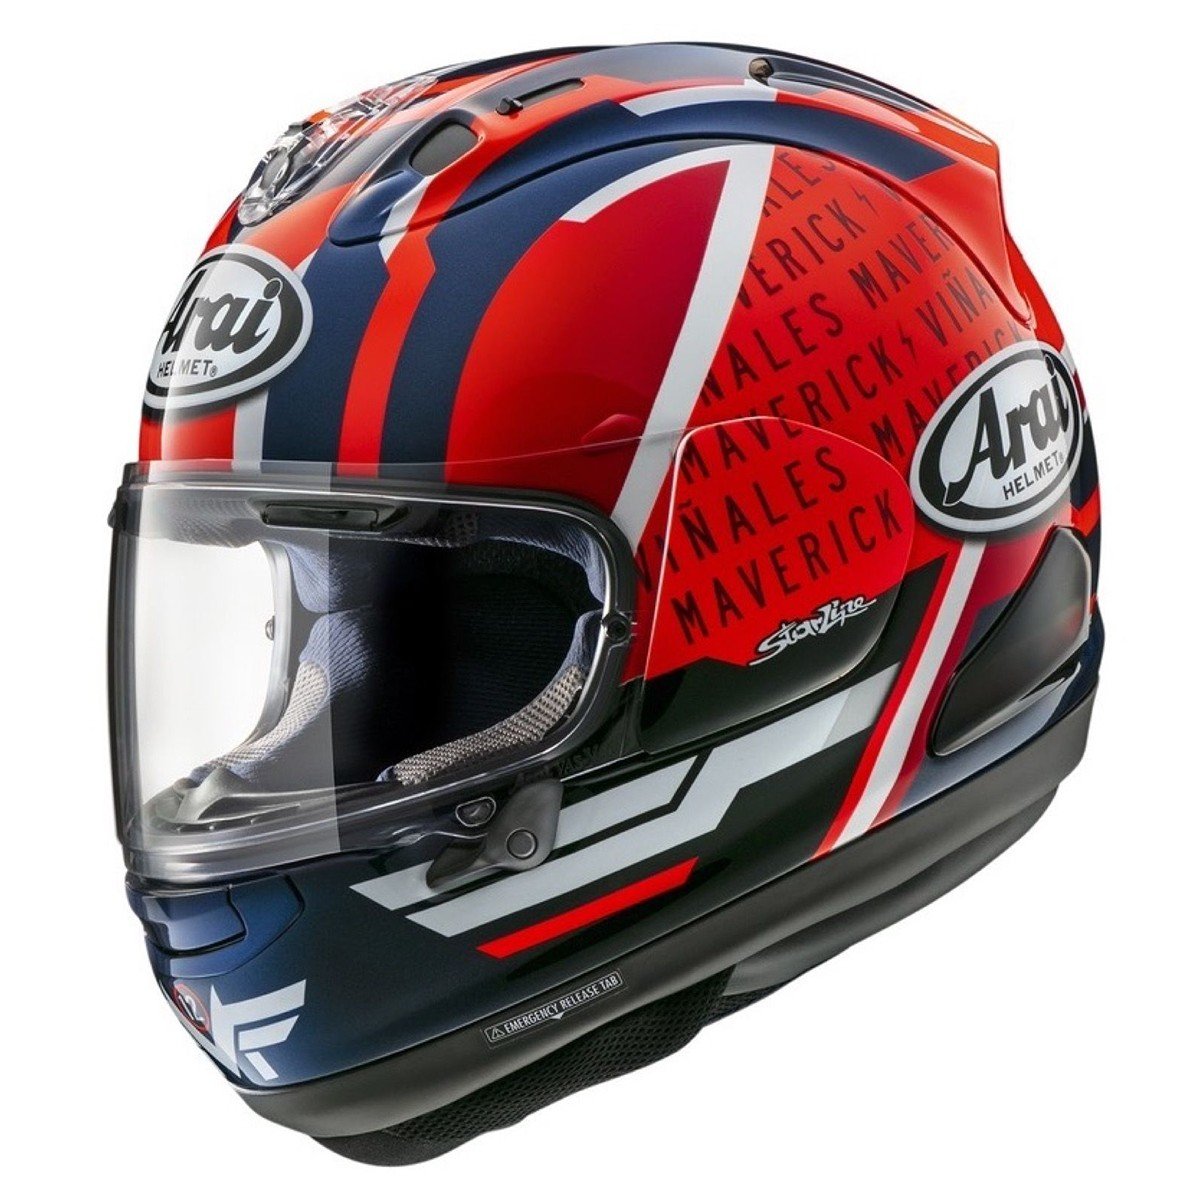 Image of EU Arai RX-7V EVO Maverick Viñales Full Face Helmet Taille S